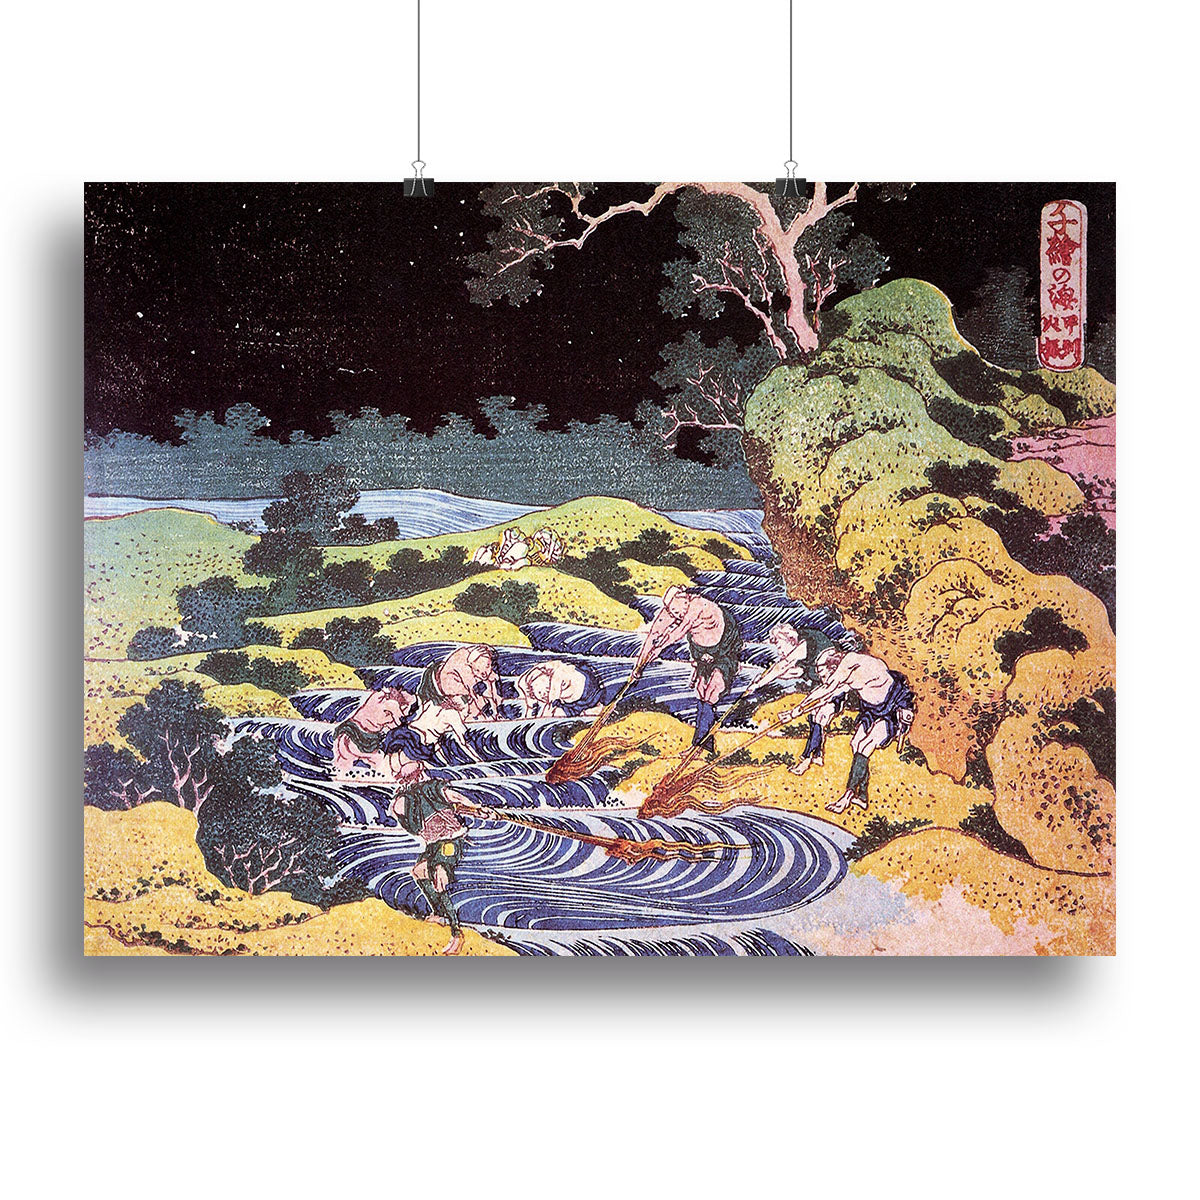 Ocean landscape by Hokusai Canvas Print or Poster - Canvas Art Rocks - 2